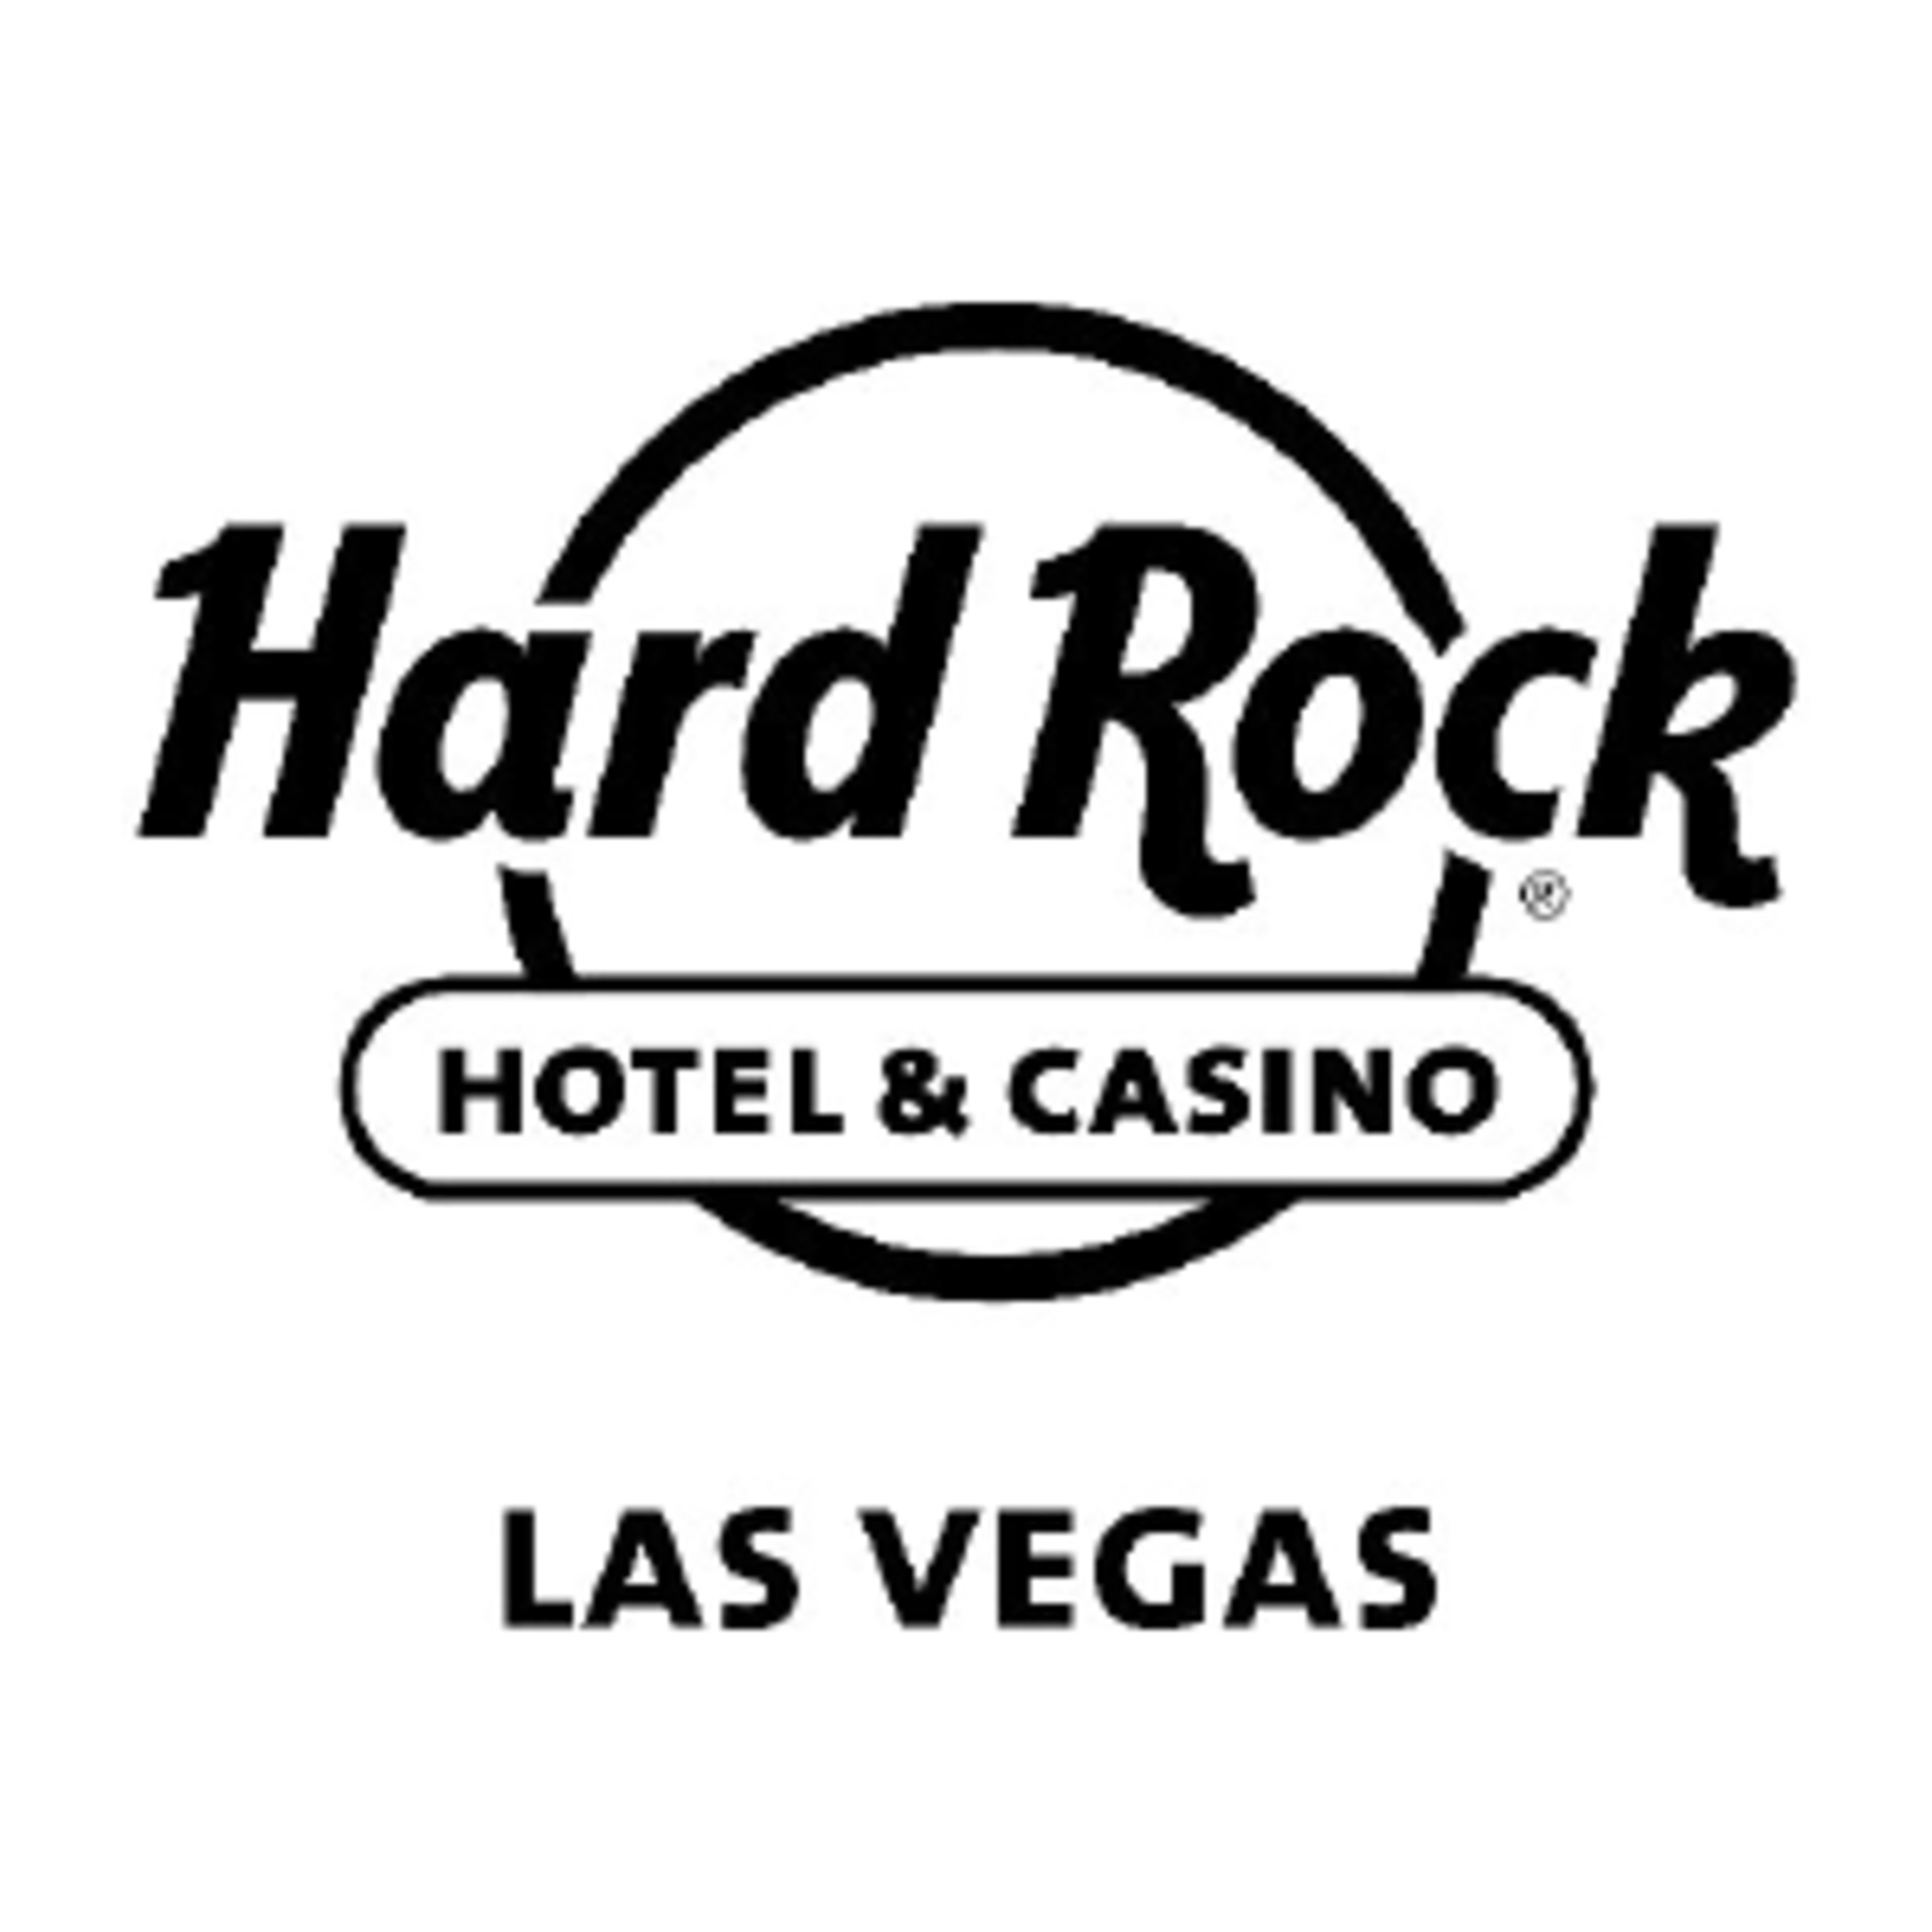 Hard Rock Hotel & CasinoCode